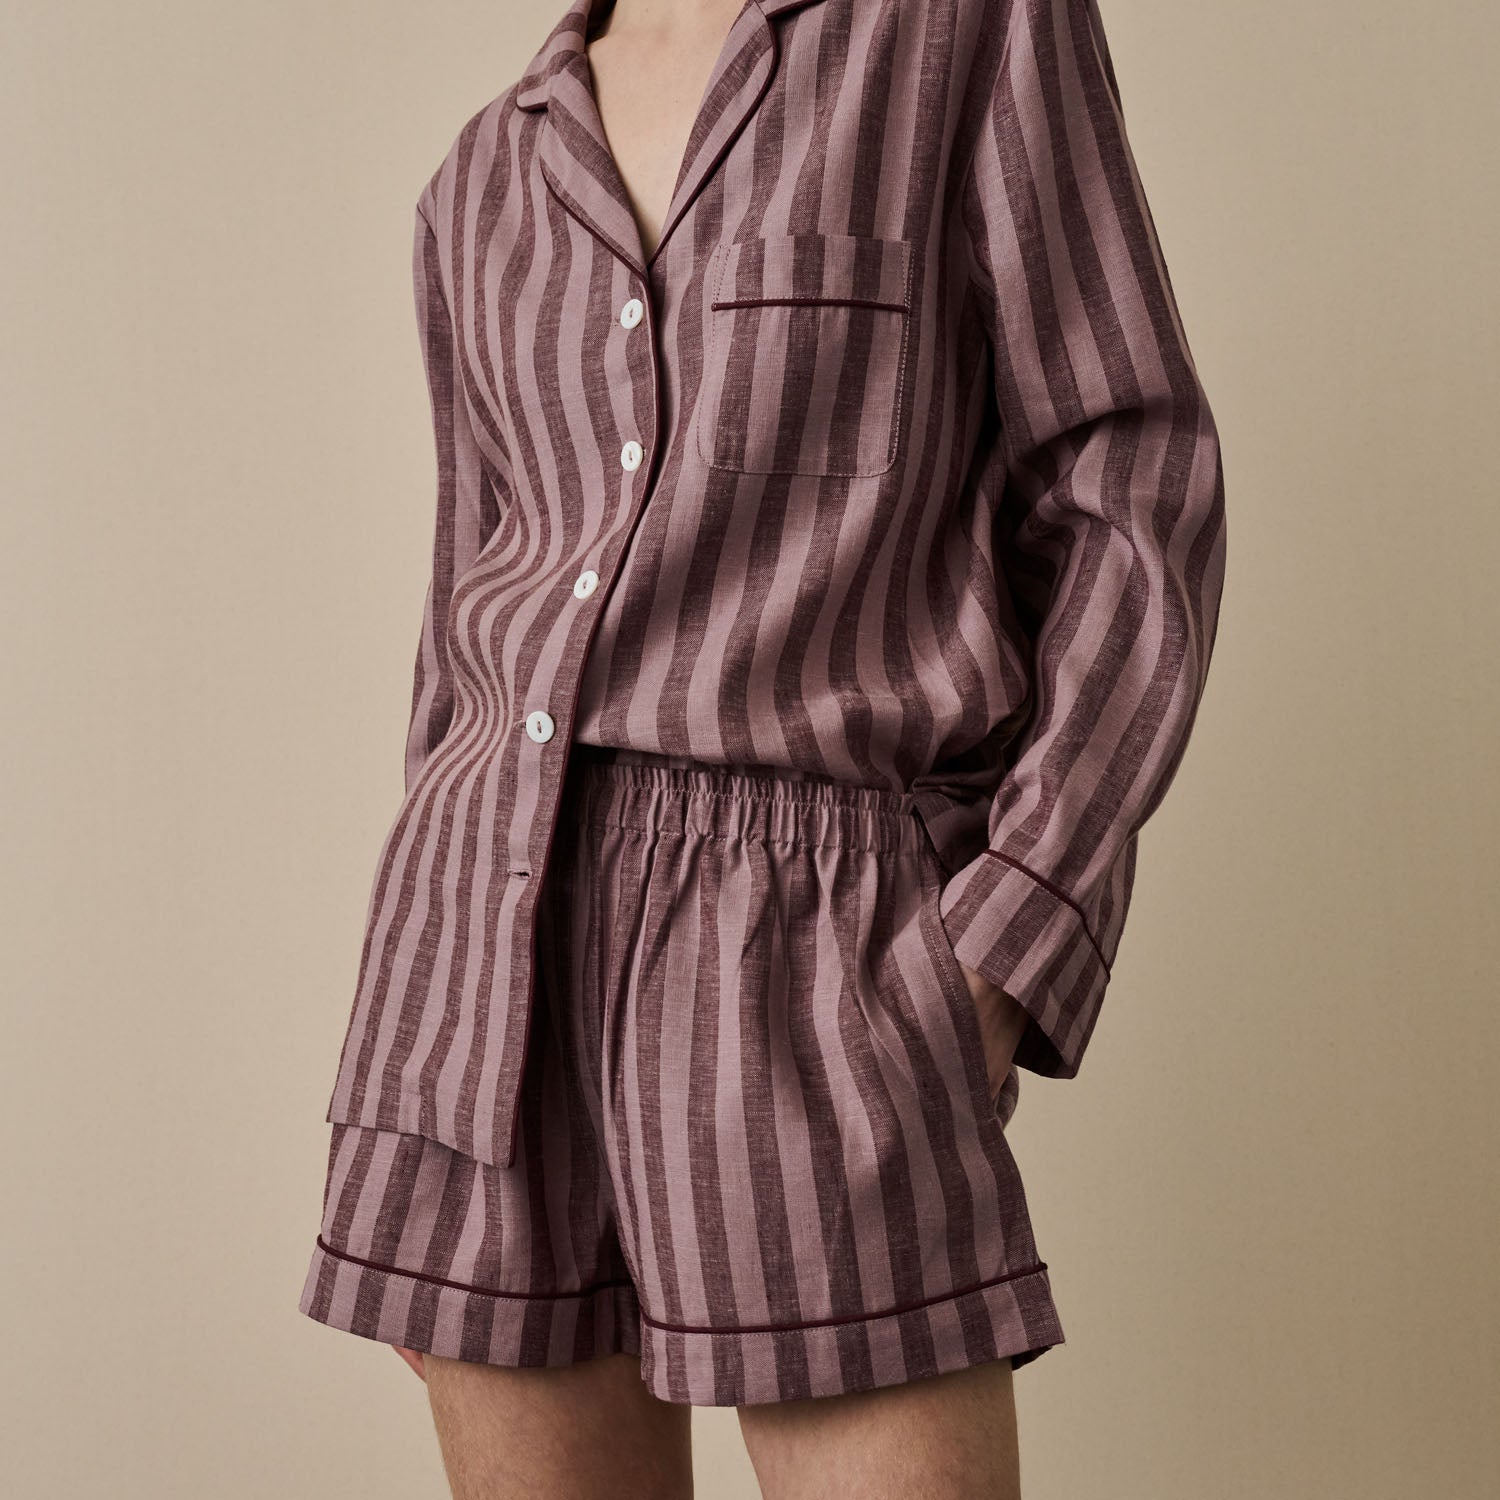 Port & Woodrose Striped Linen Women's PJ Shorts